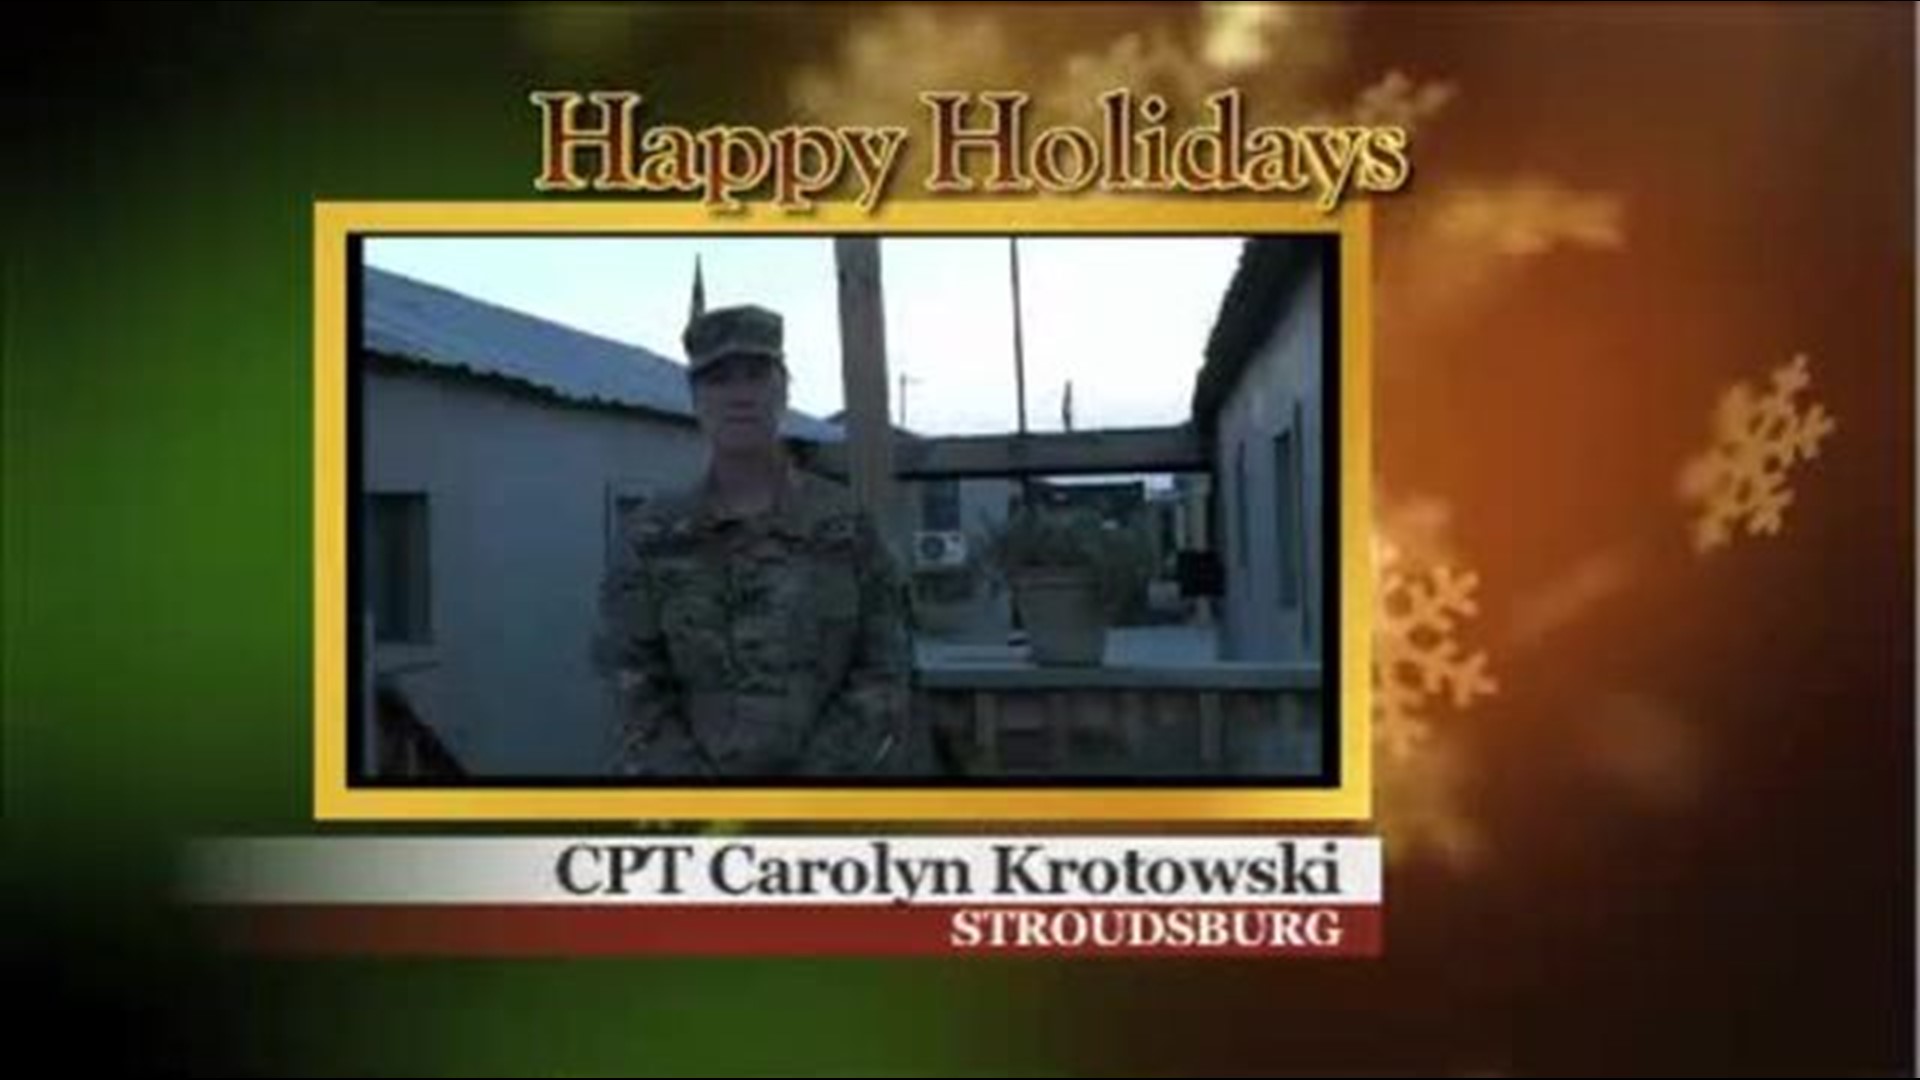 Military Greeting: CPT Carolyn Krotowski